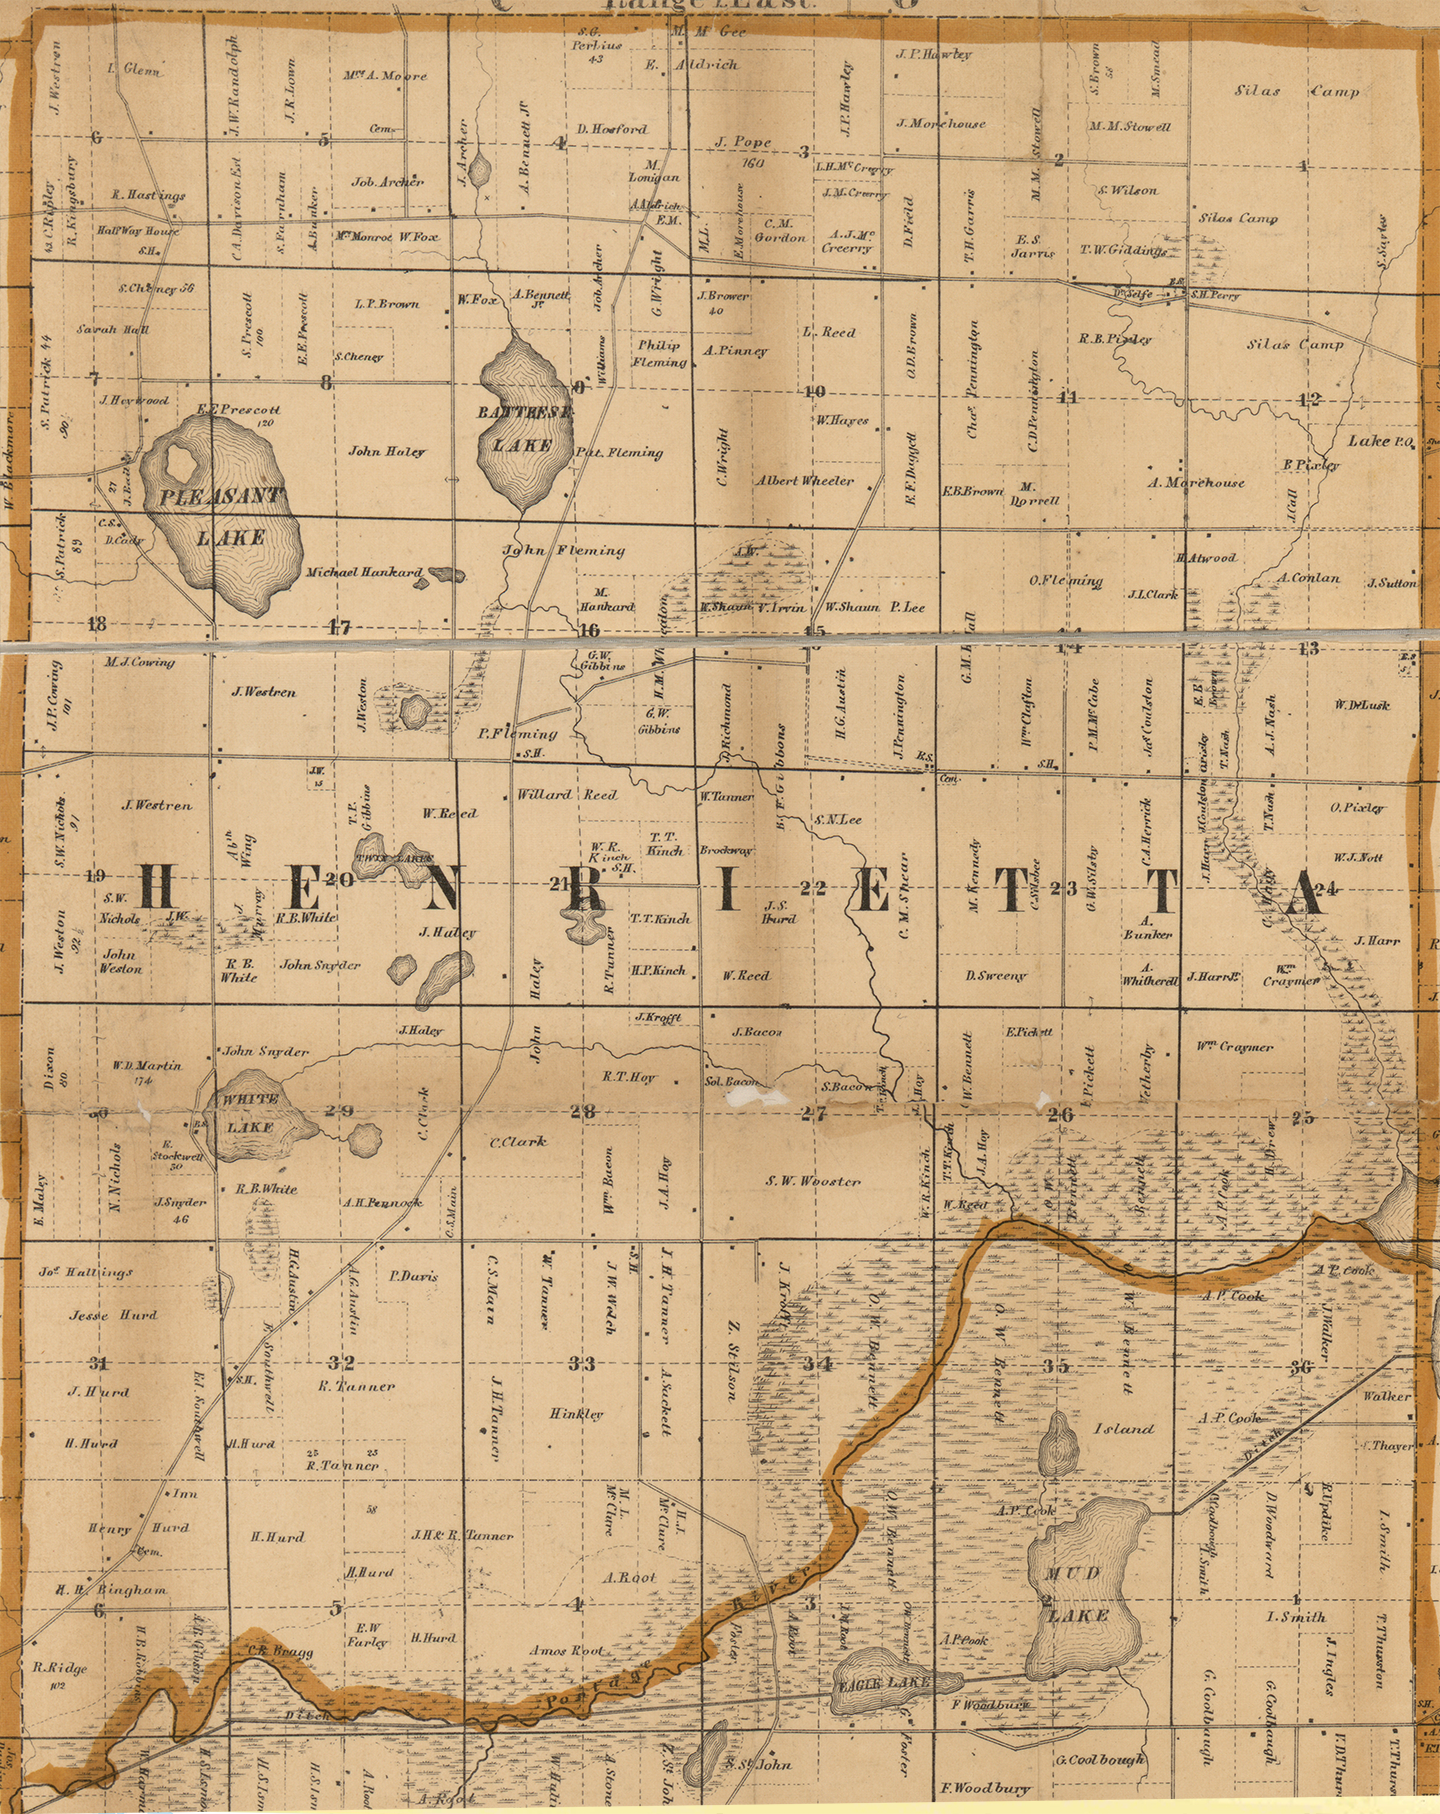 1858 Henrietta Township, Michigan landownership map